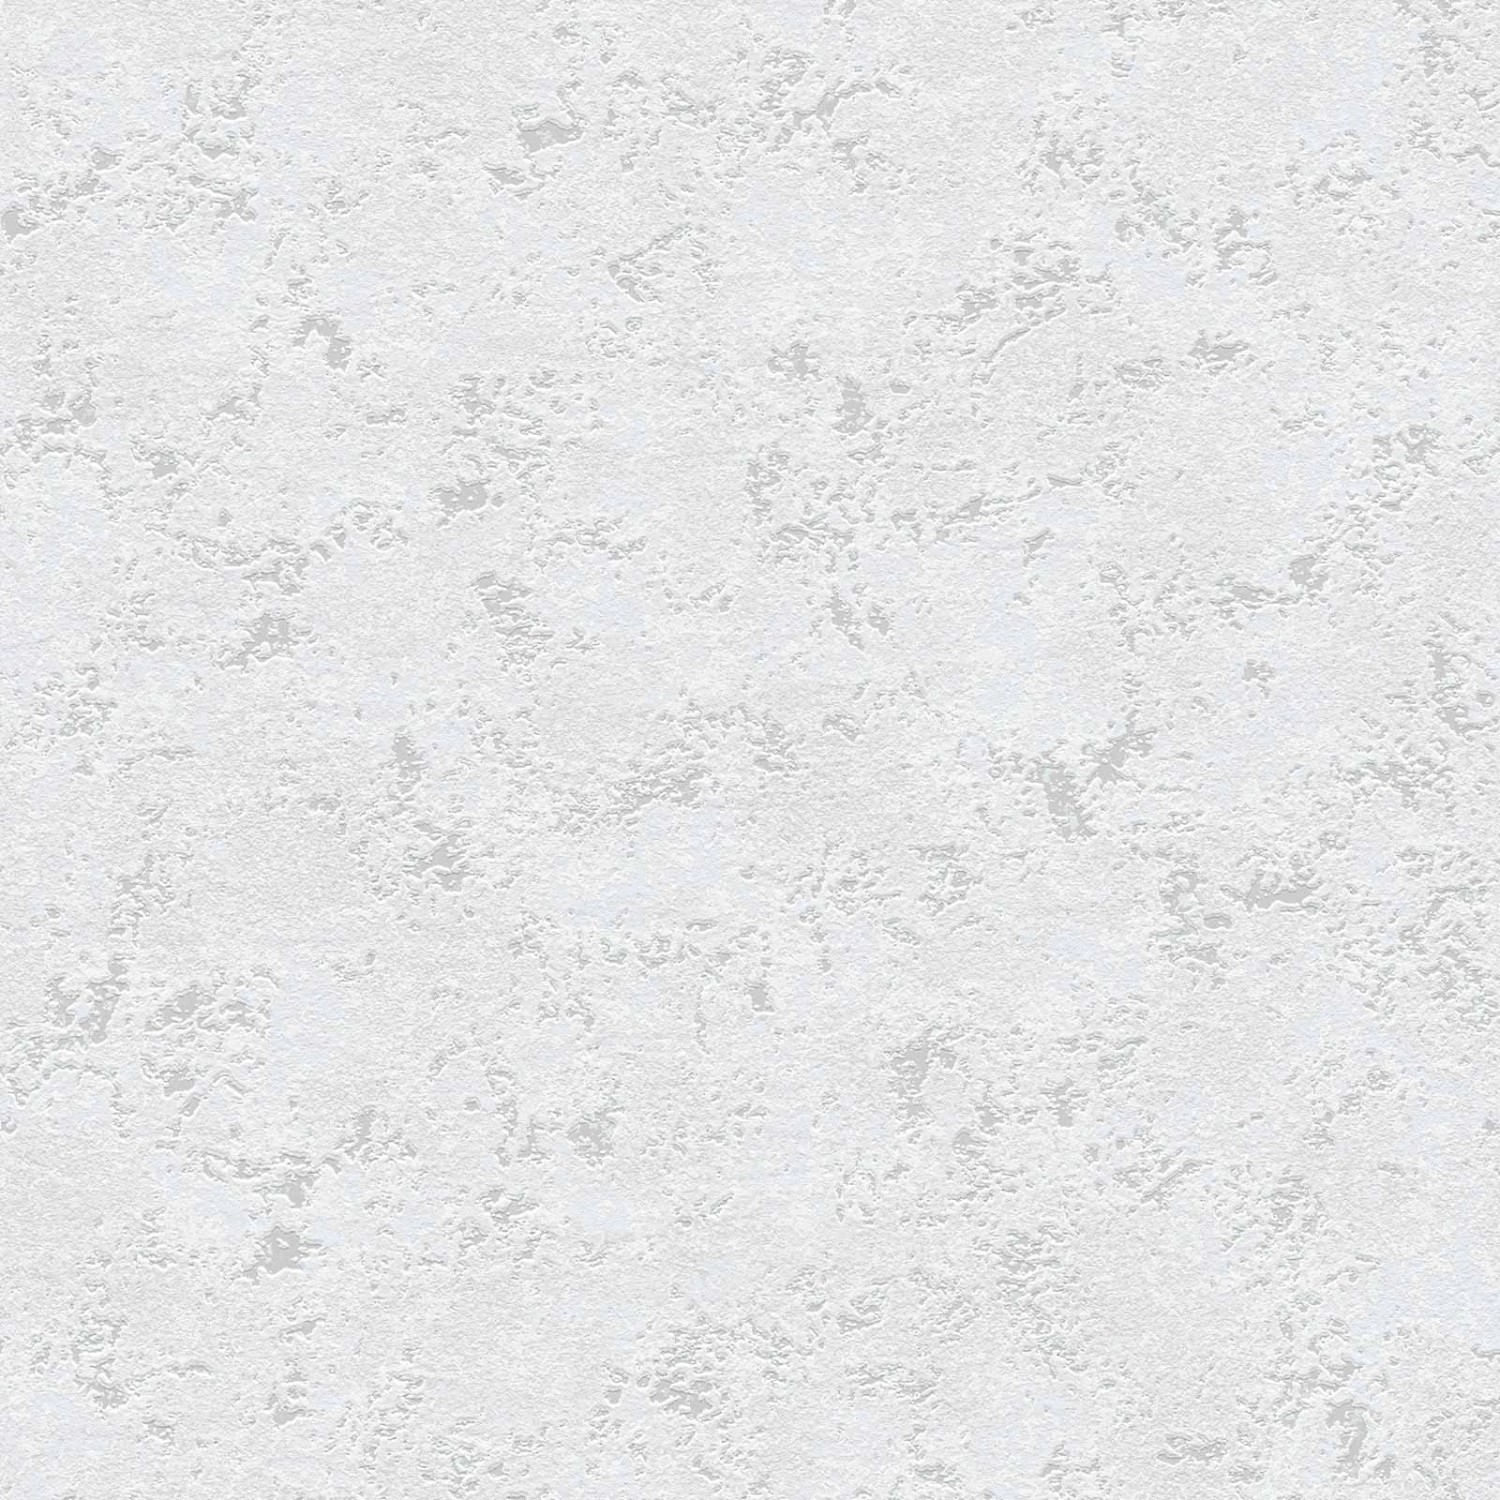 Bricoflor Tapete in Betonoptik Hellgrau Industrial Vliestapete mit Silber Metallic Effekt Vlies Betontapete mit Vinyl von Bricoflor